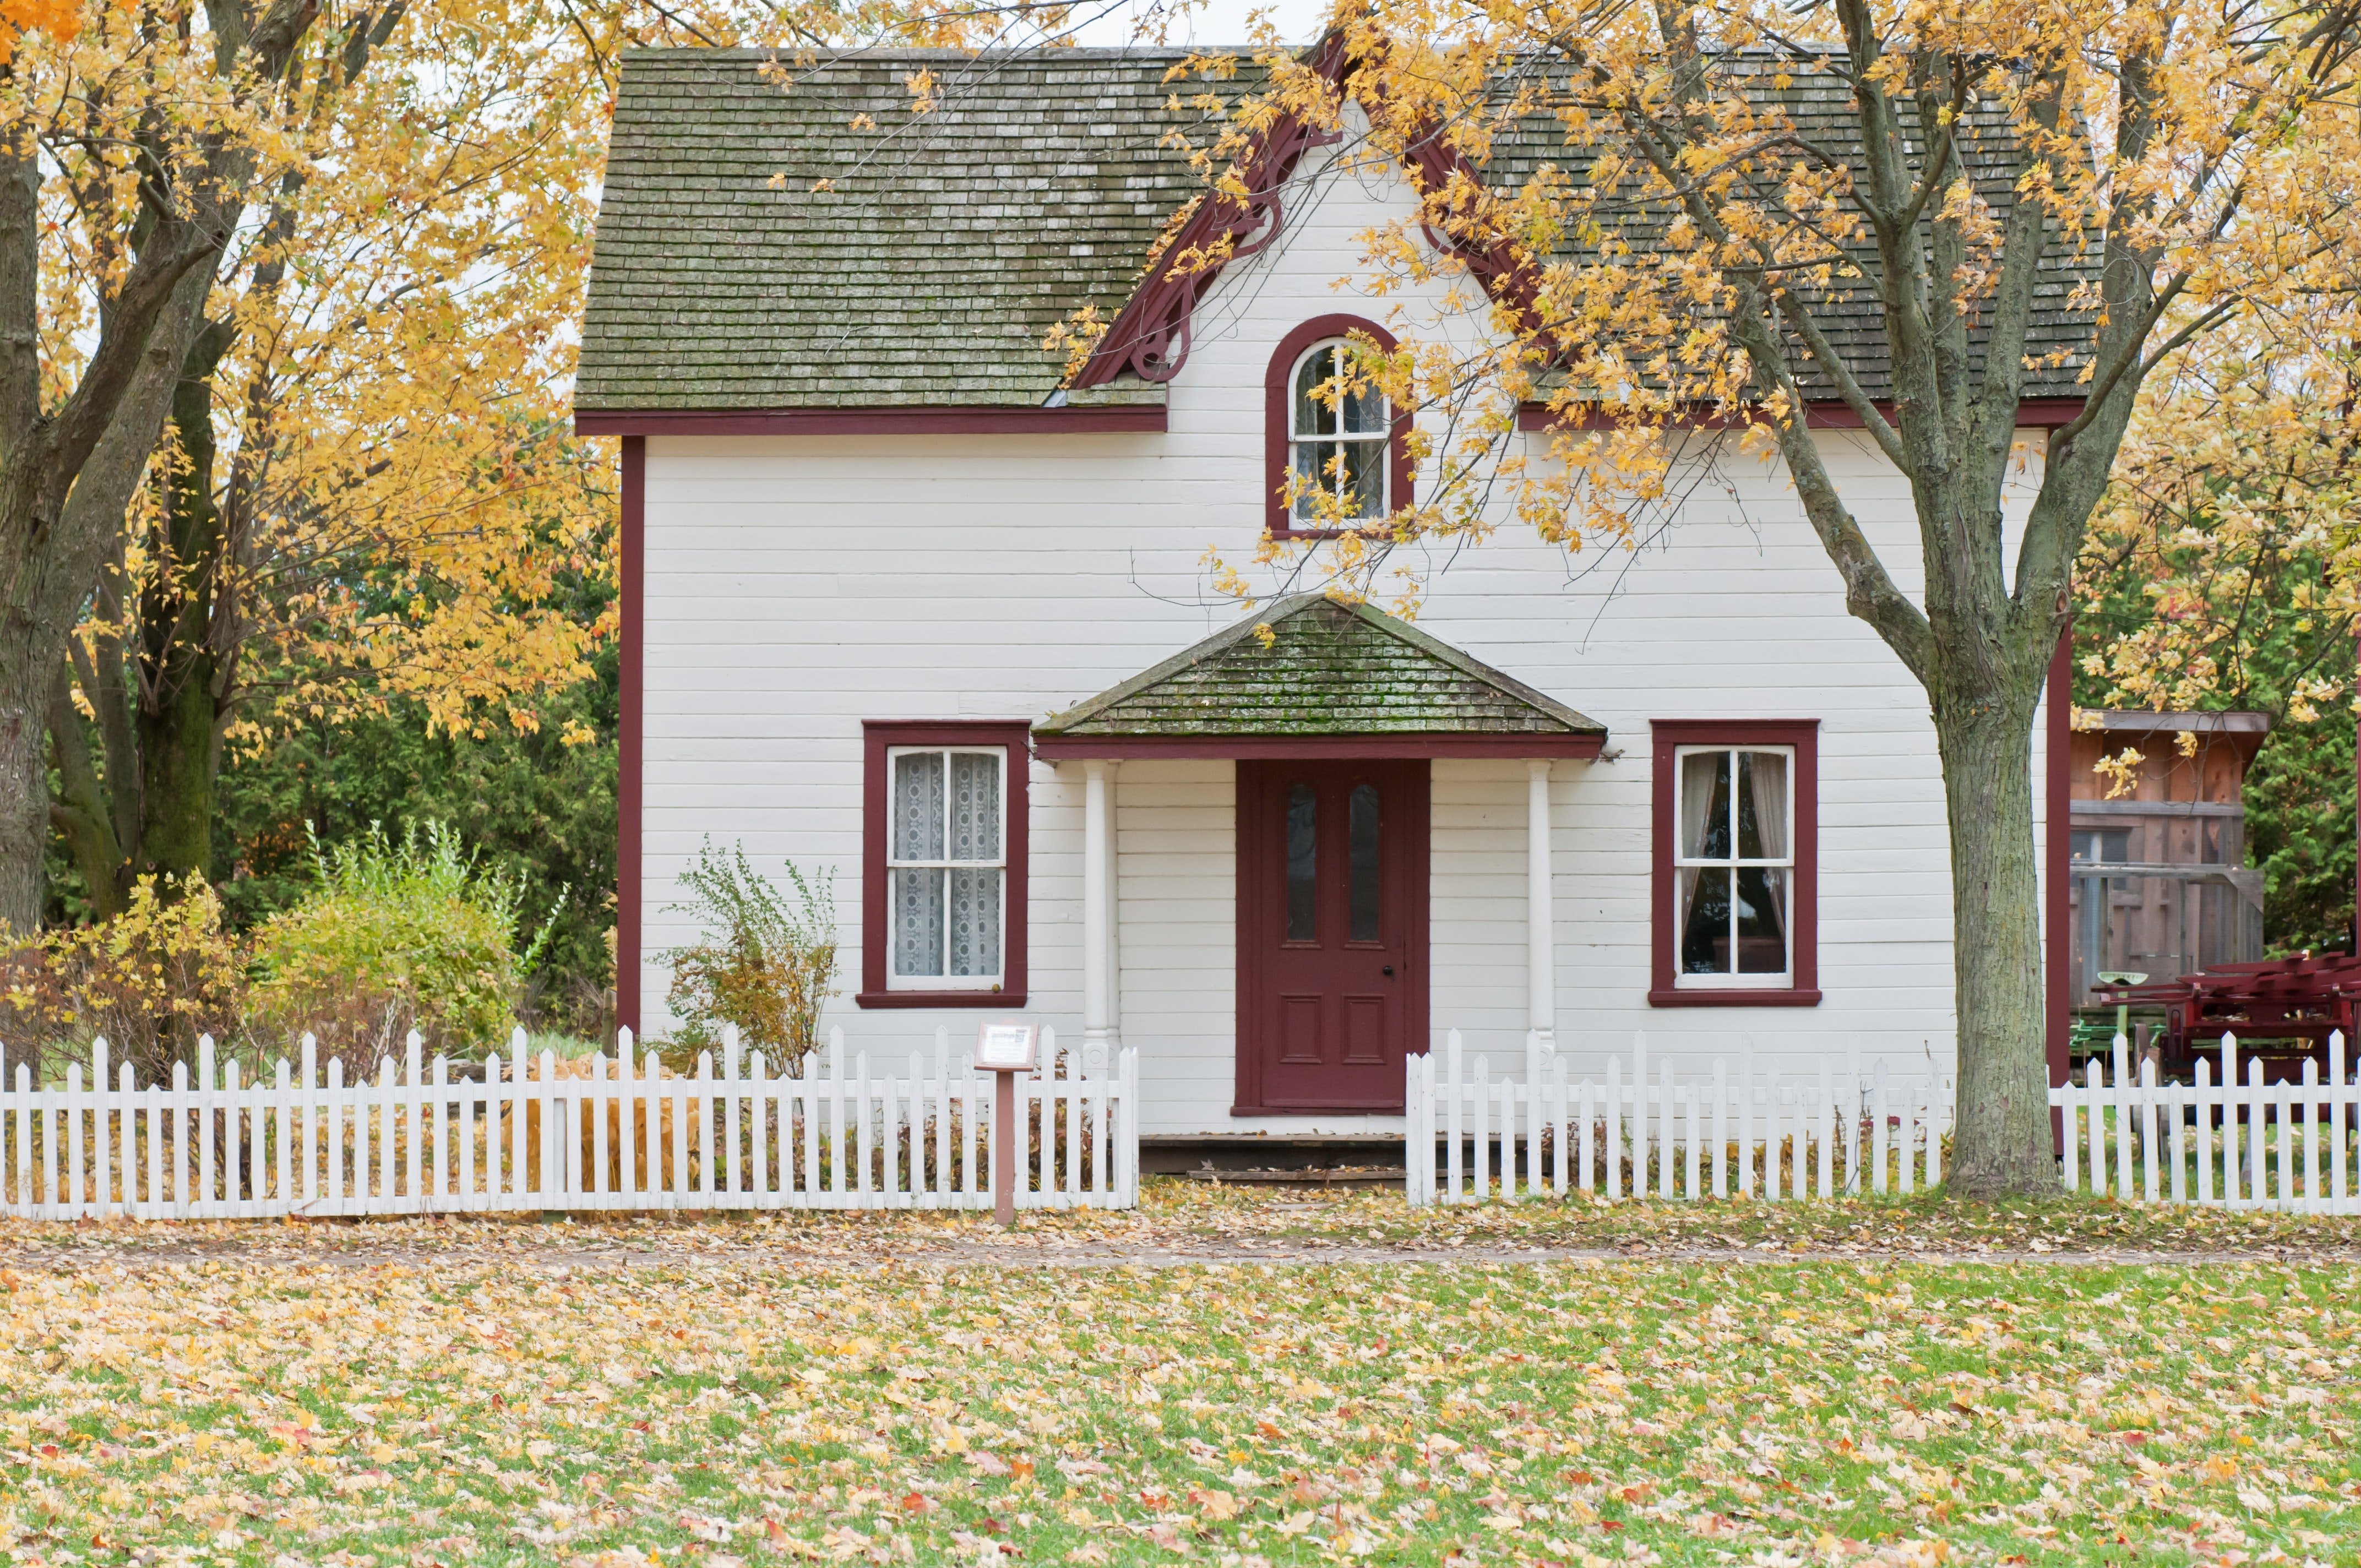 Casa de madera blanca con un cerco bajo, rodeada de naturaleza. | Foto: Pexels